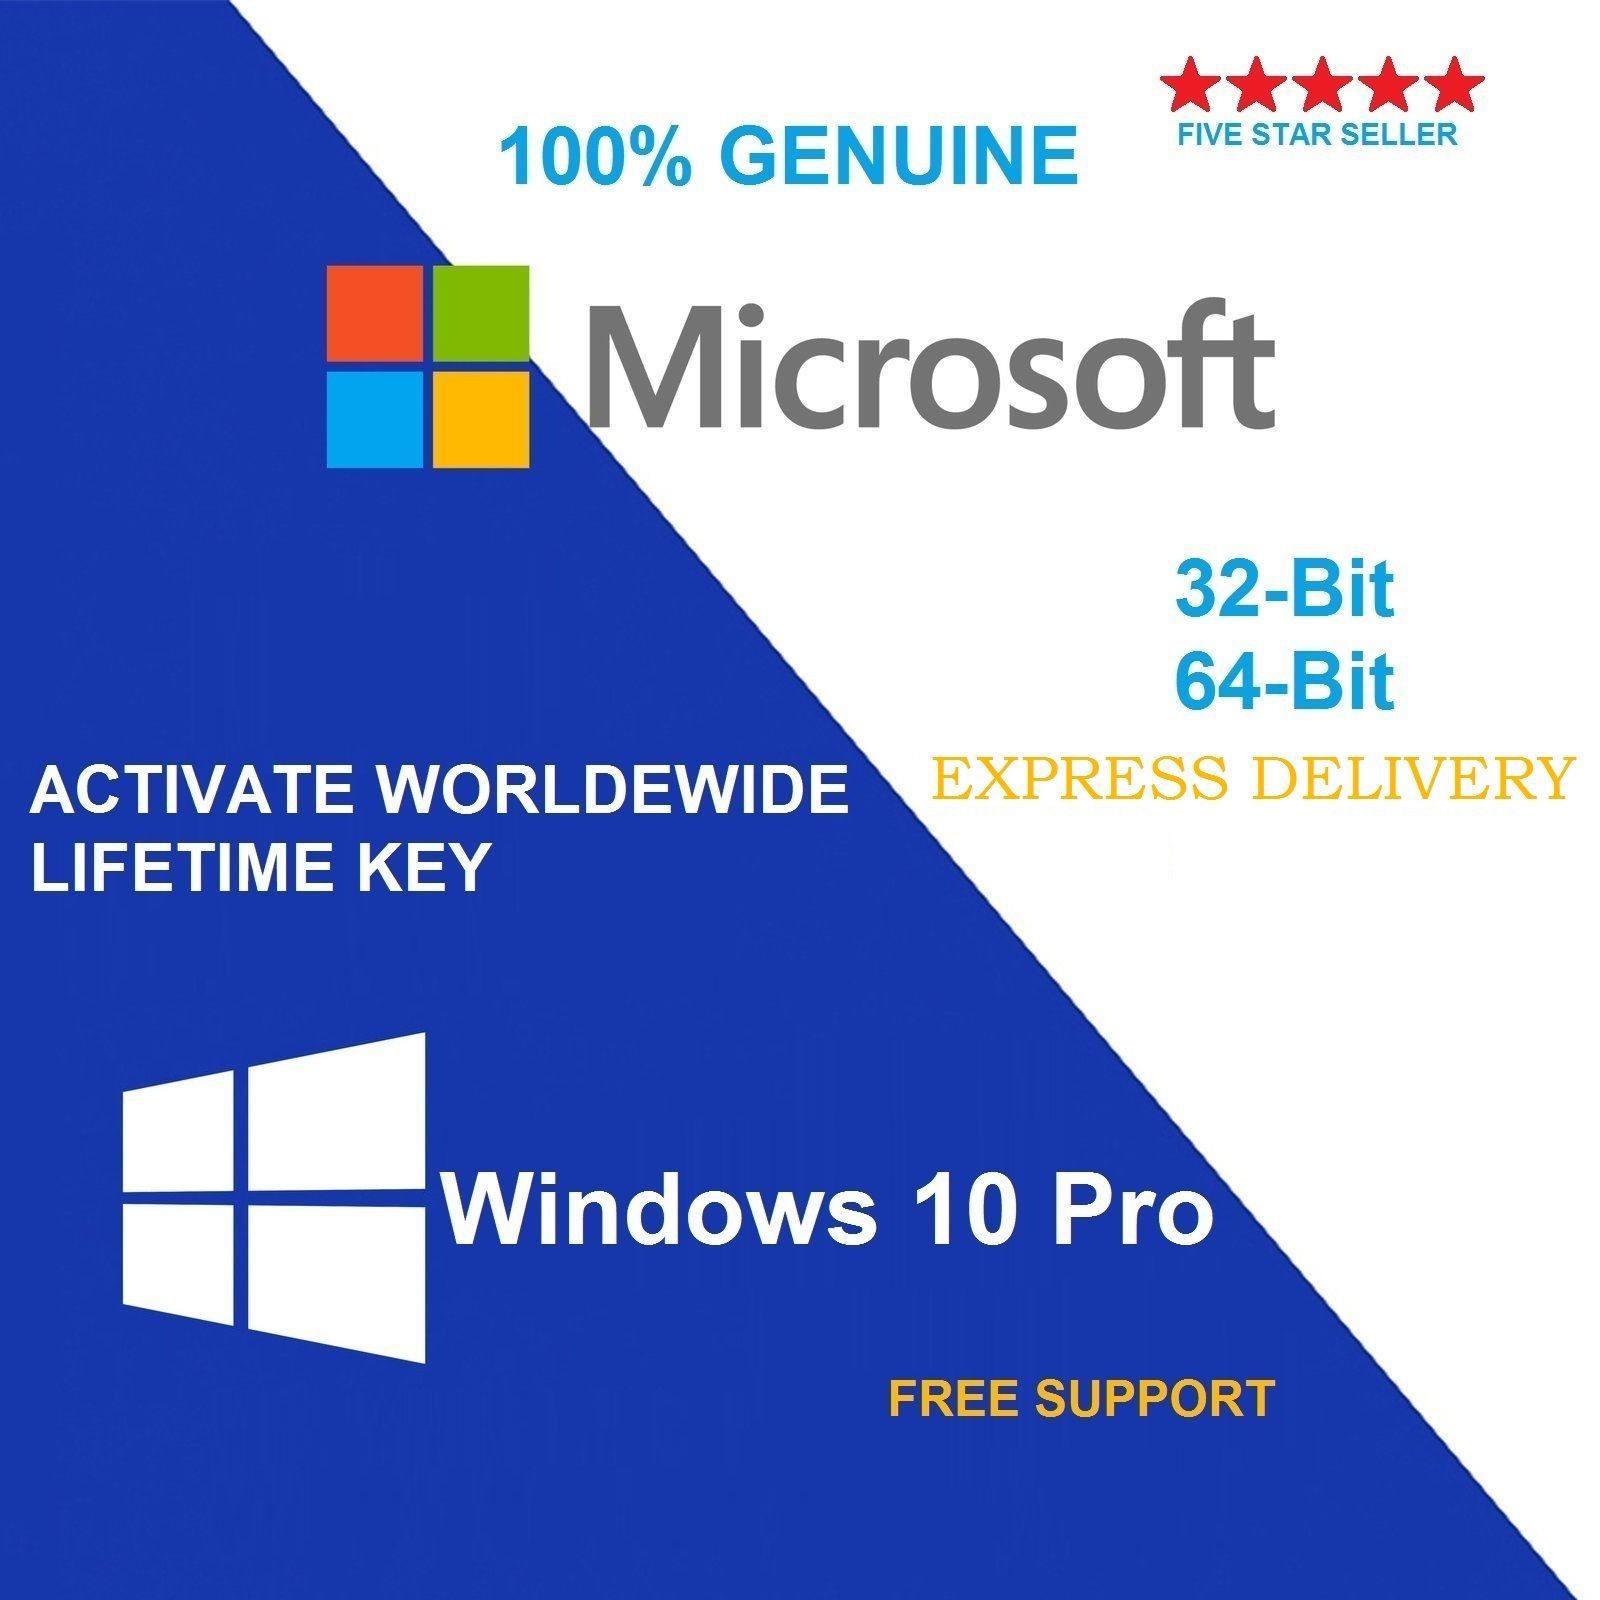 windows 10 pro professional 3 key 32 64 bit